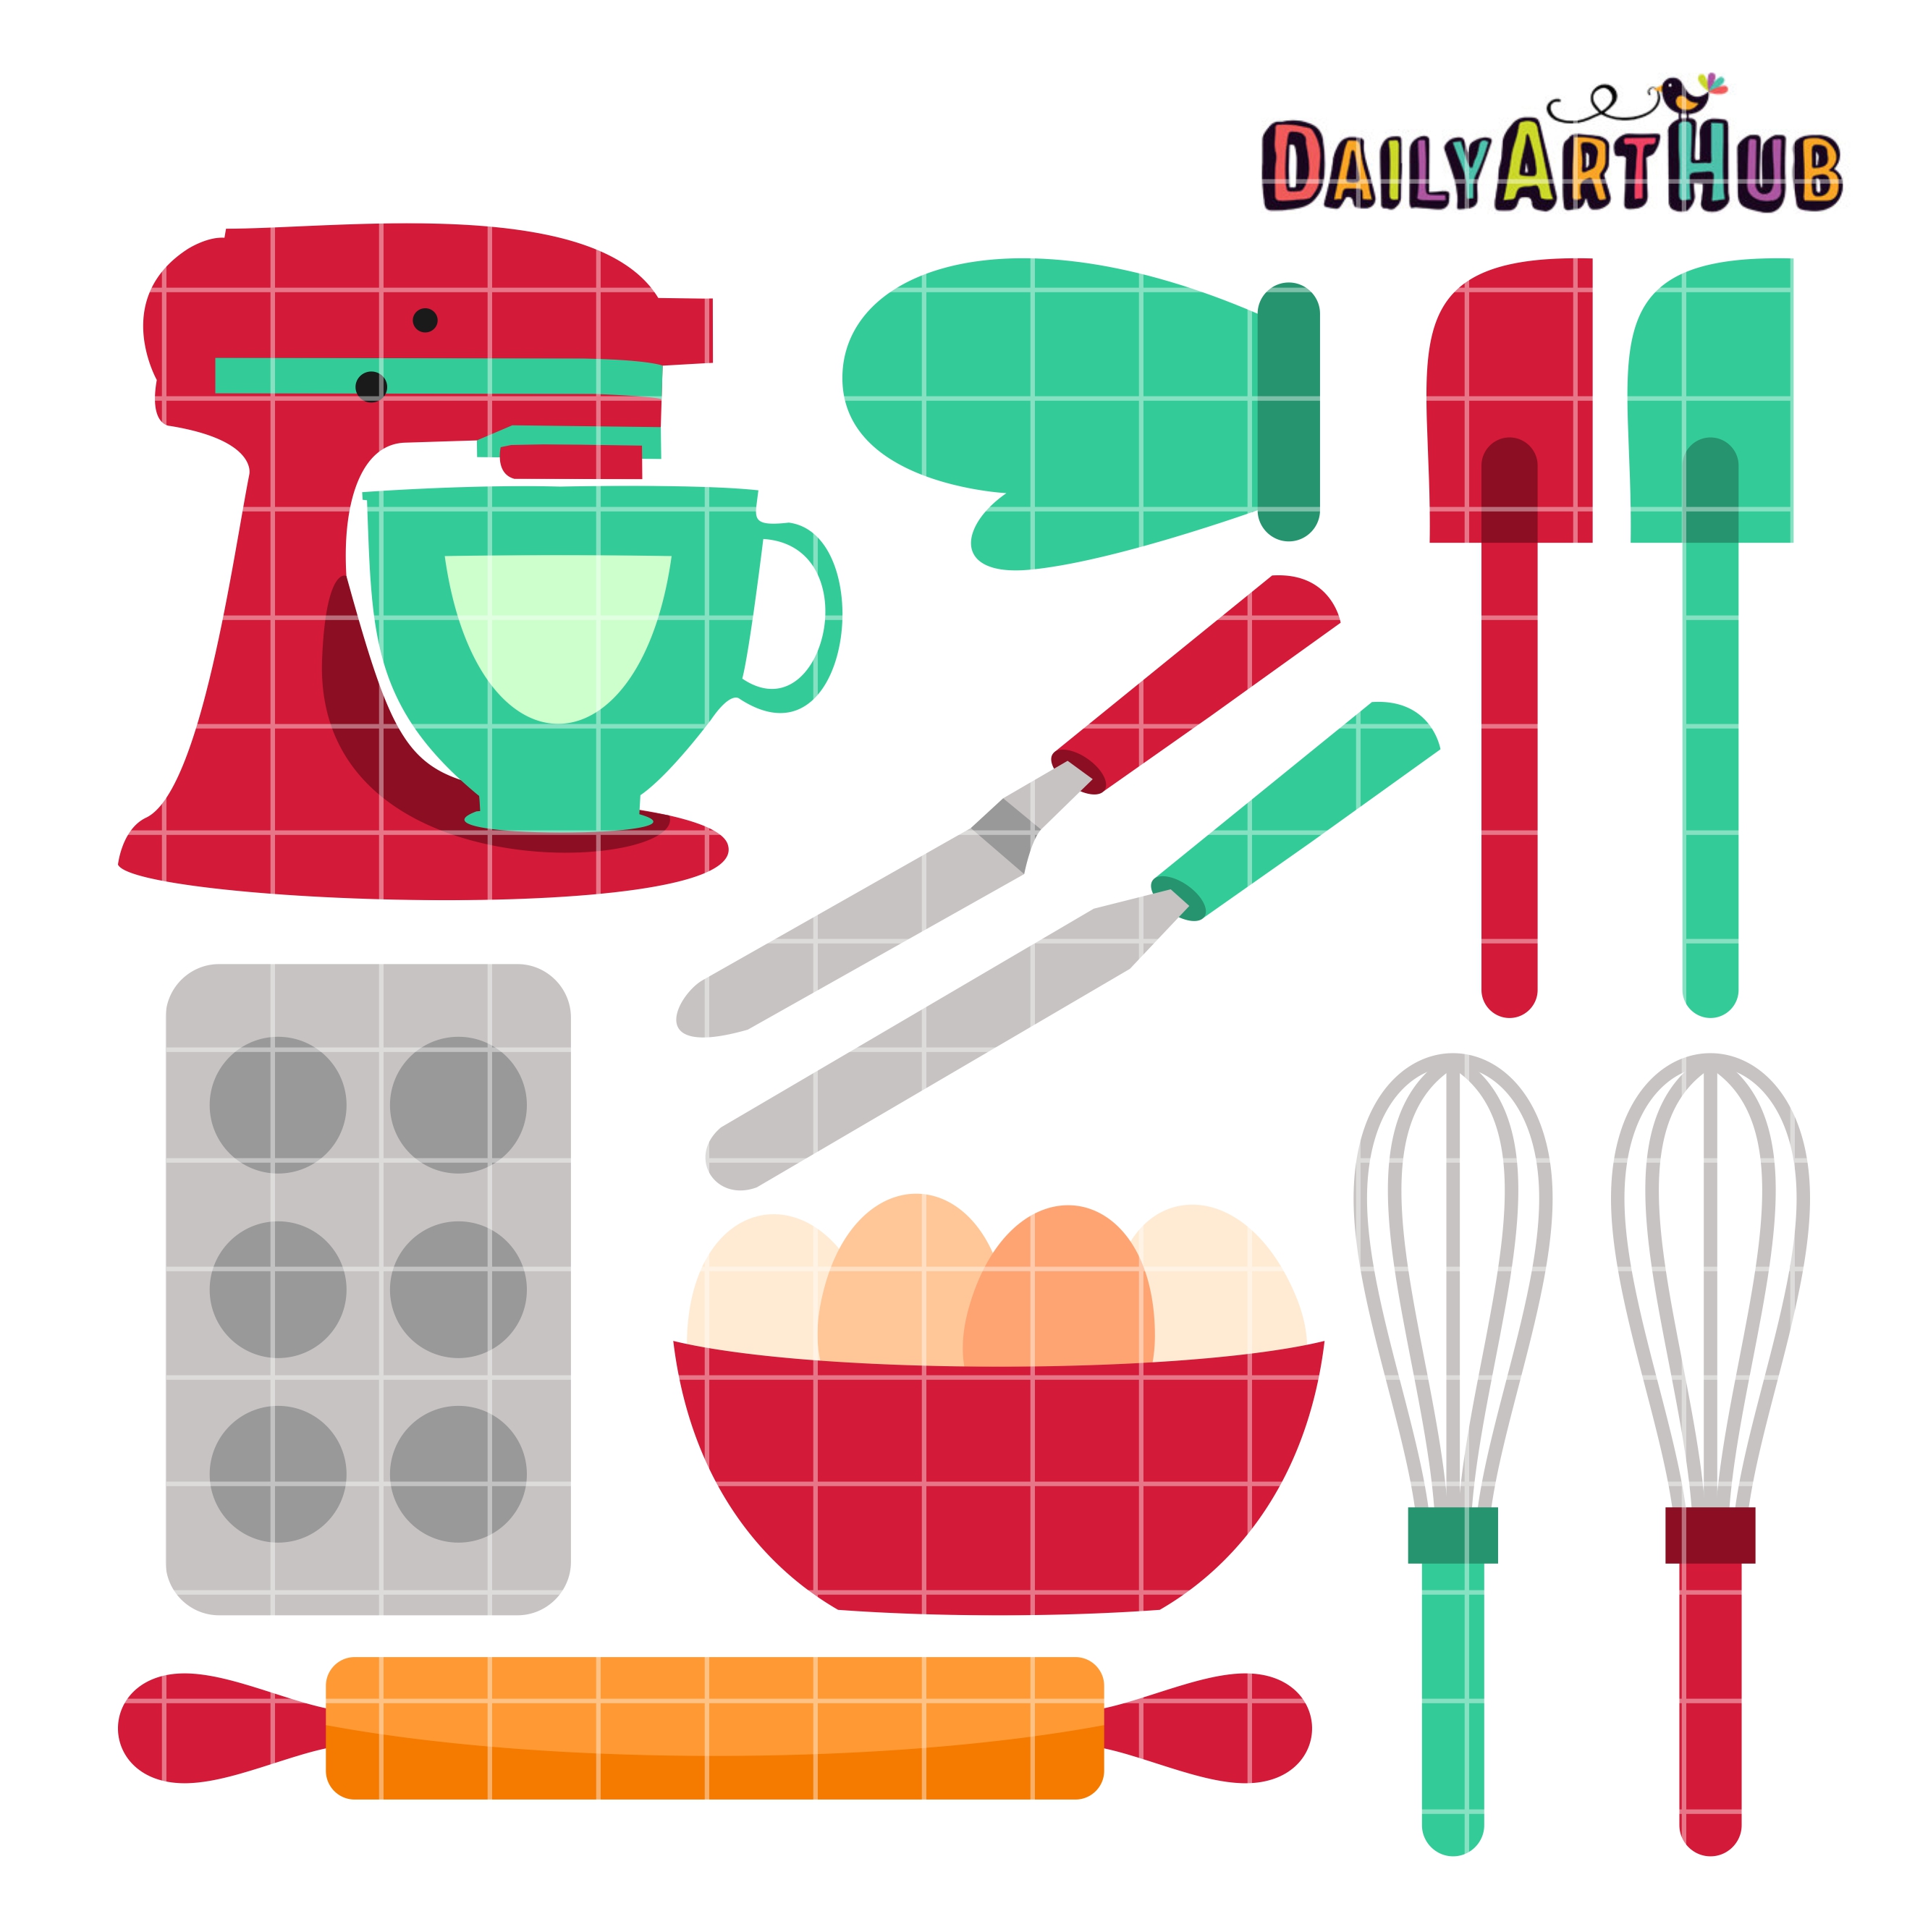 Baking Tools Clip Art Set - Daily Art Hub - Free Clip Art Everyday.